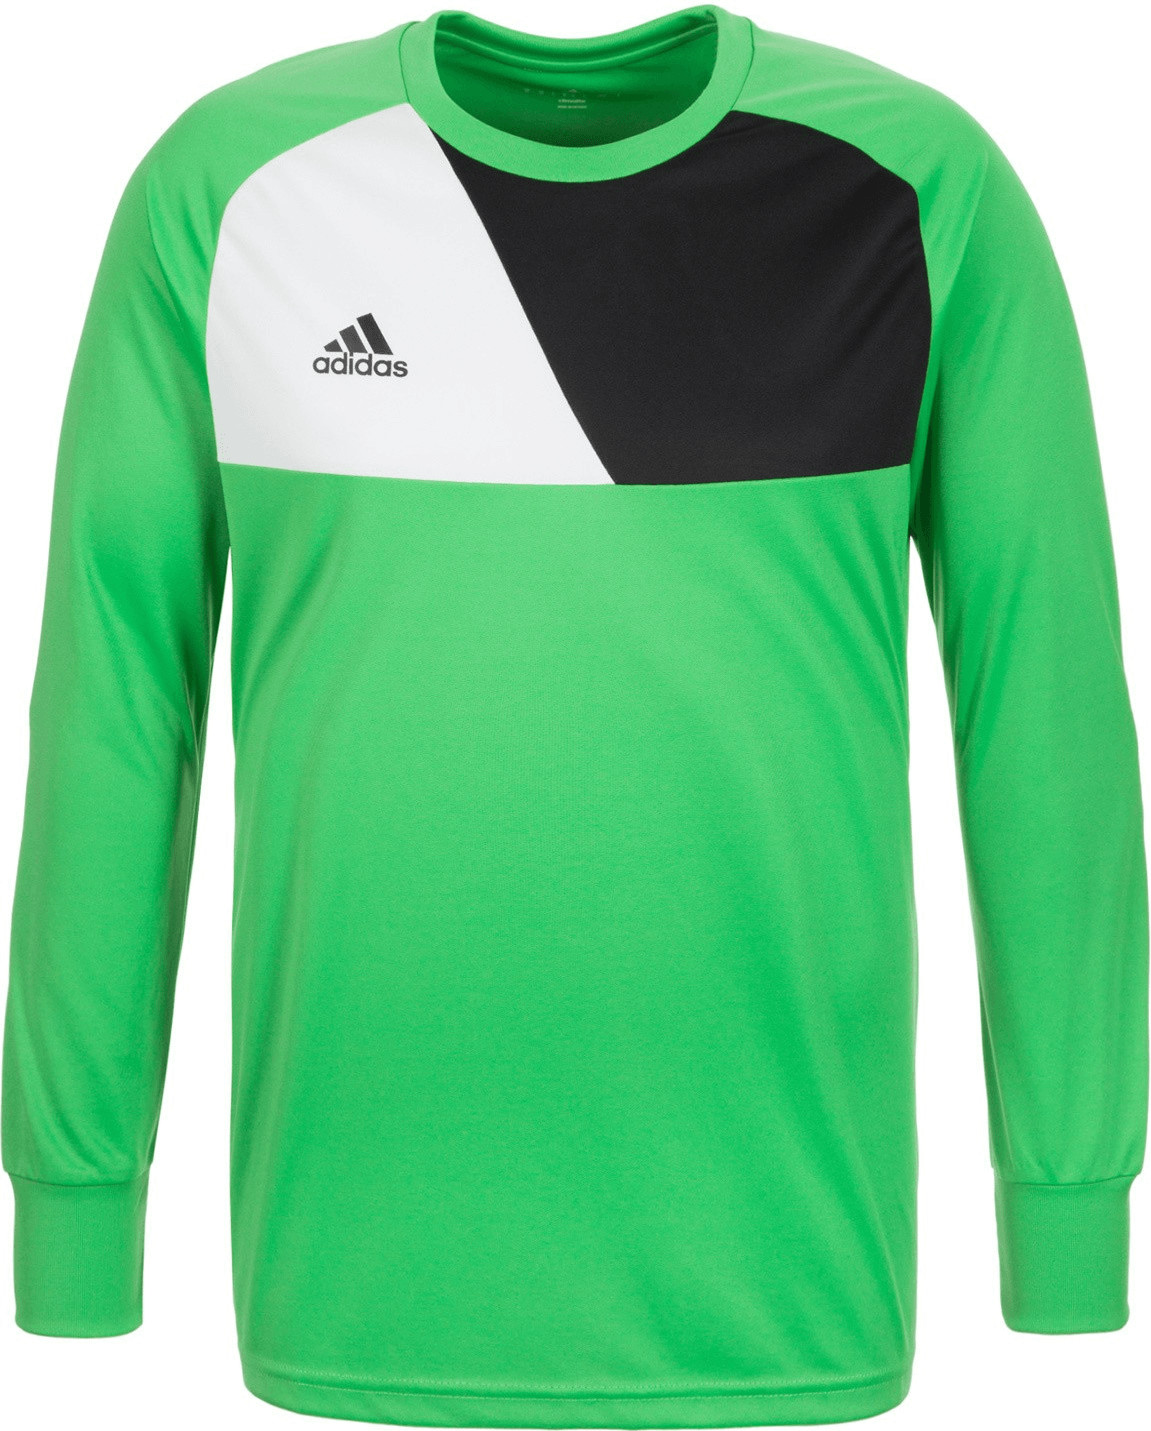 Photos - Football Kit Adidas Assita 17 Goalkeeper Jersey Youth green/black 